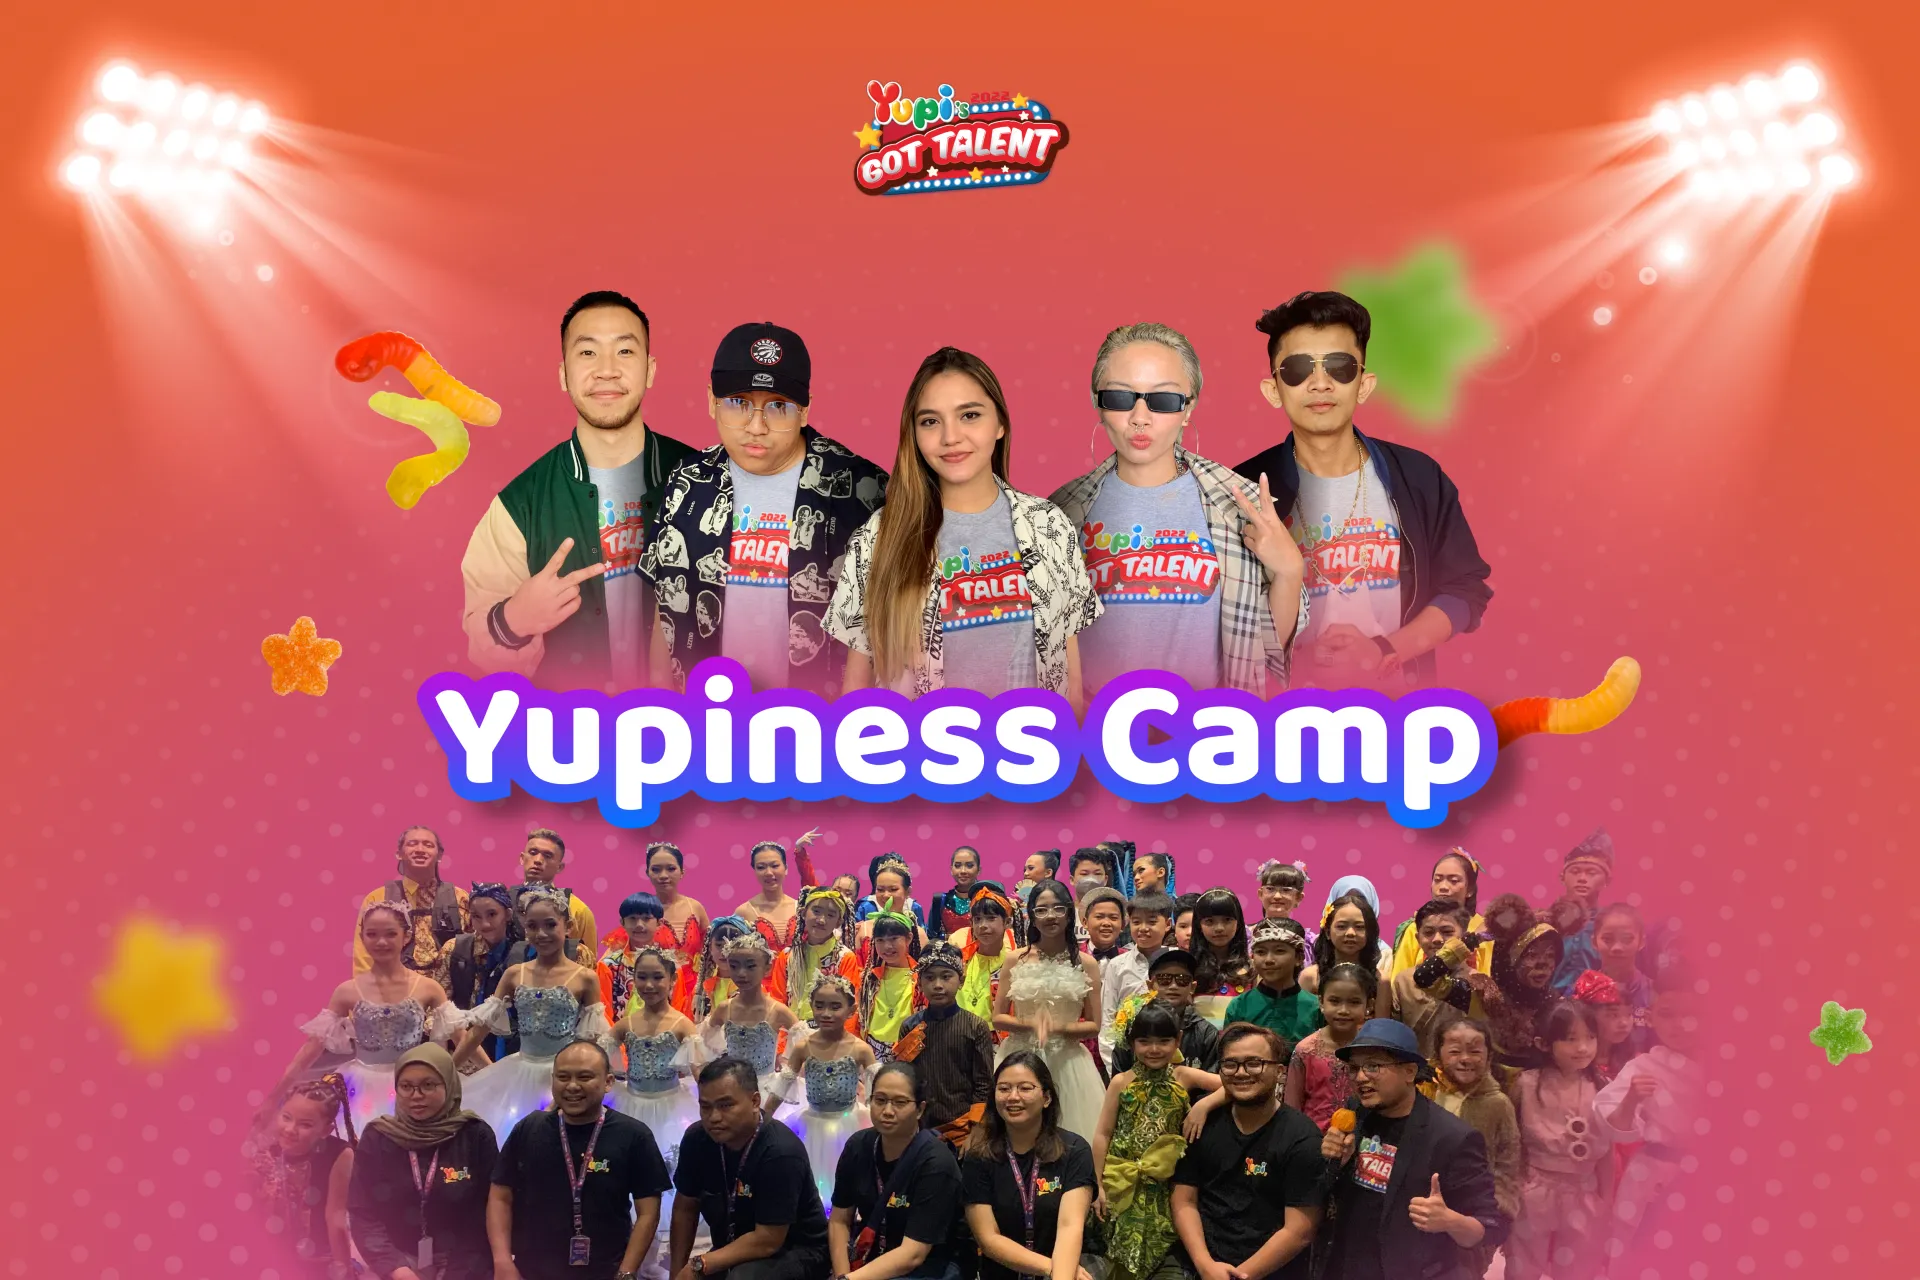 Yupi_Artikel_Yupiness Camp-06